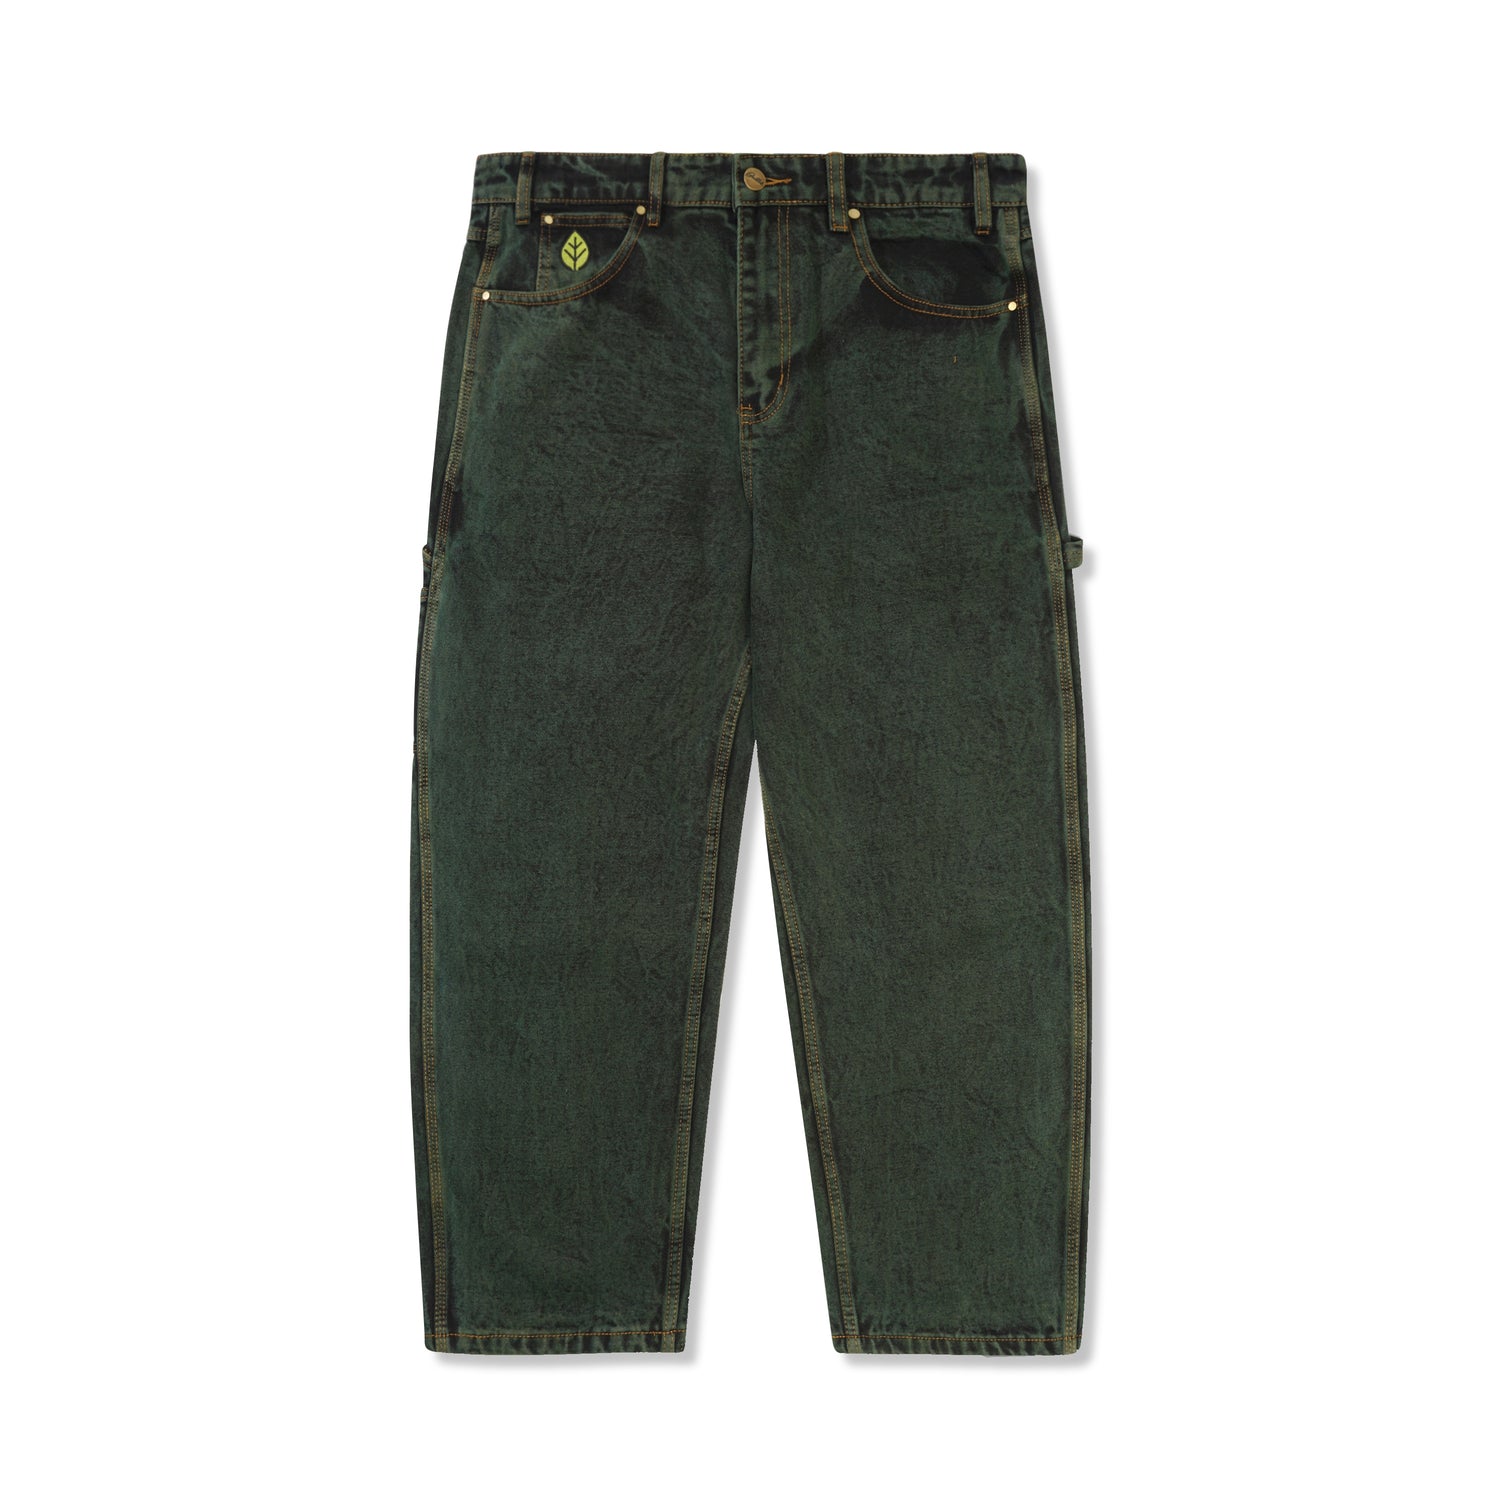 Weathergear Heavyweight Denim Jeans, Deep Forest Wash